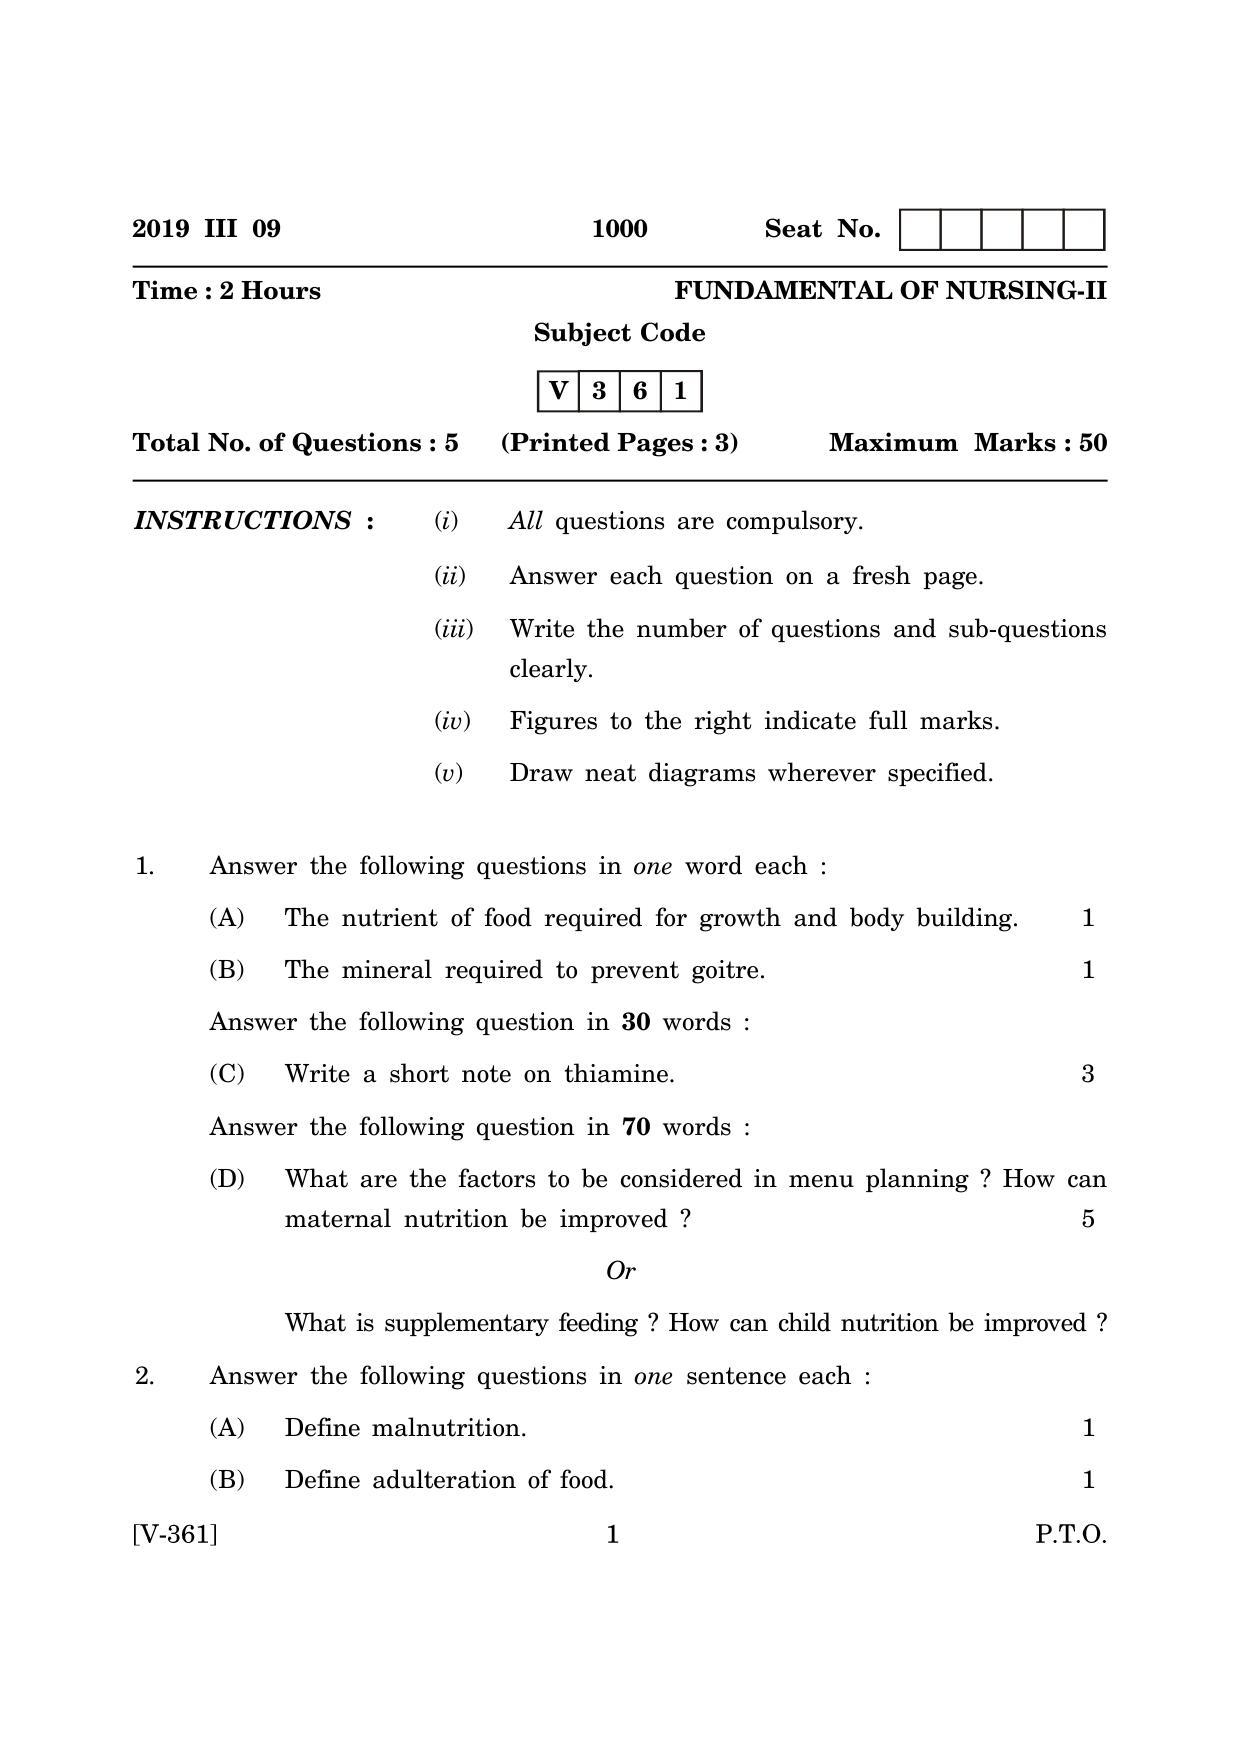 Goa Board Class 12 Fundamentals of Nursing - II  2019 (March 2019) Question Paper - Page 1